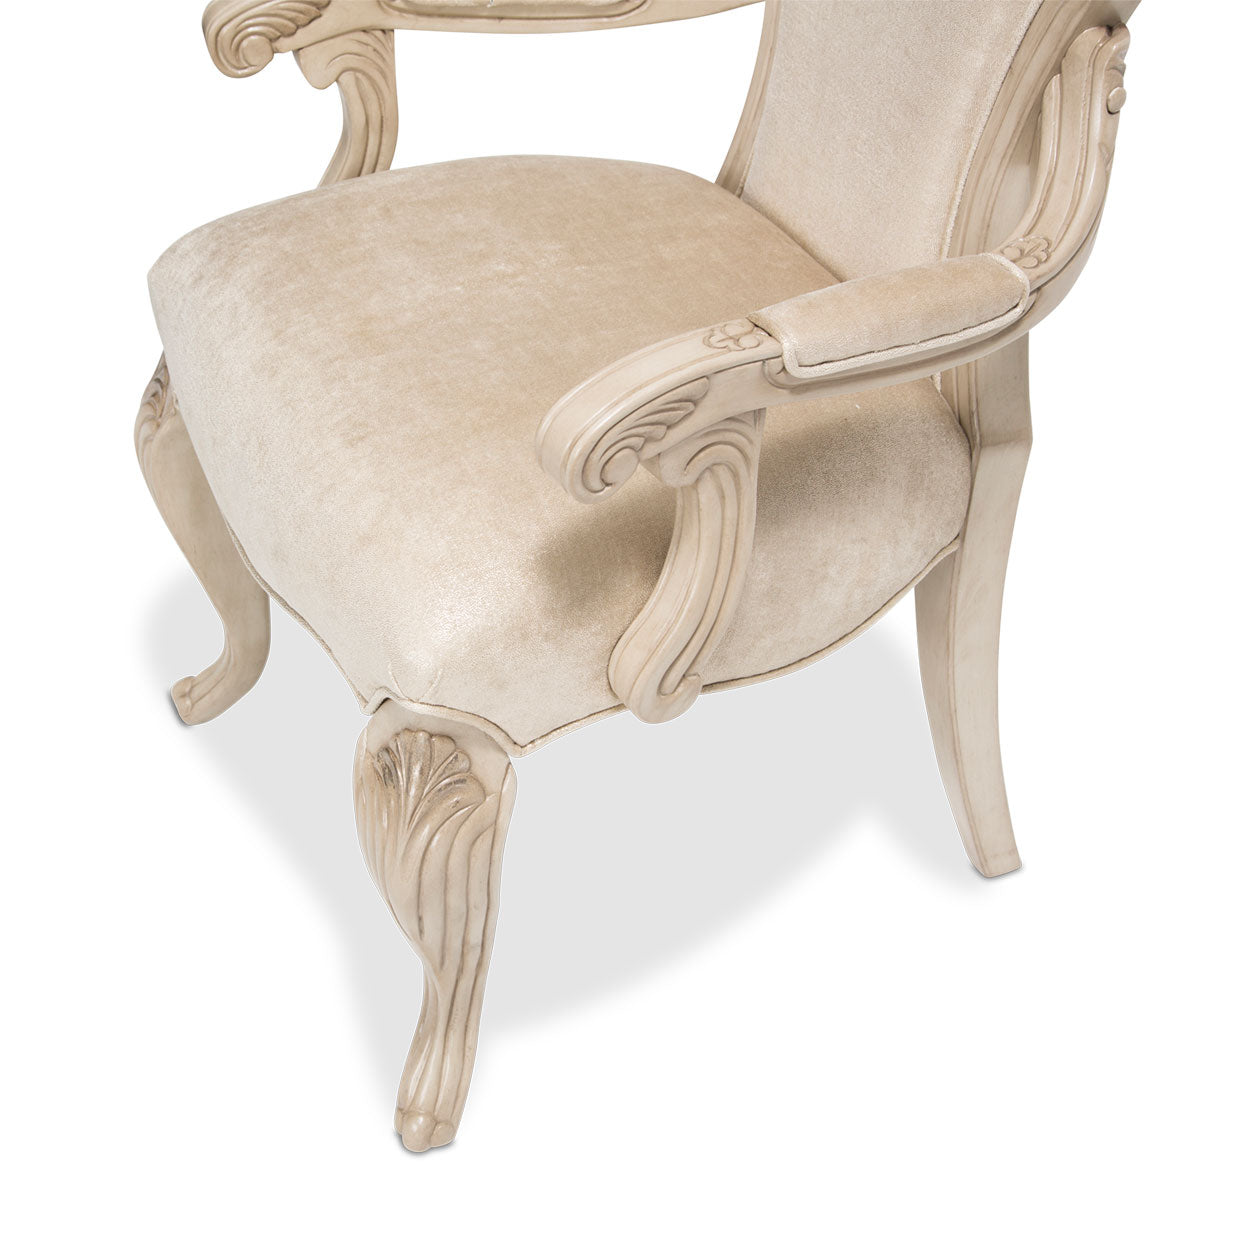 PLATINE DE ROYALE CHAMPAGNE Arm Chair - Dream art Gallery